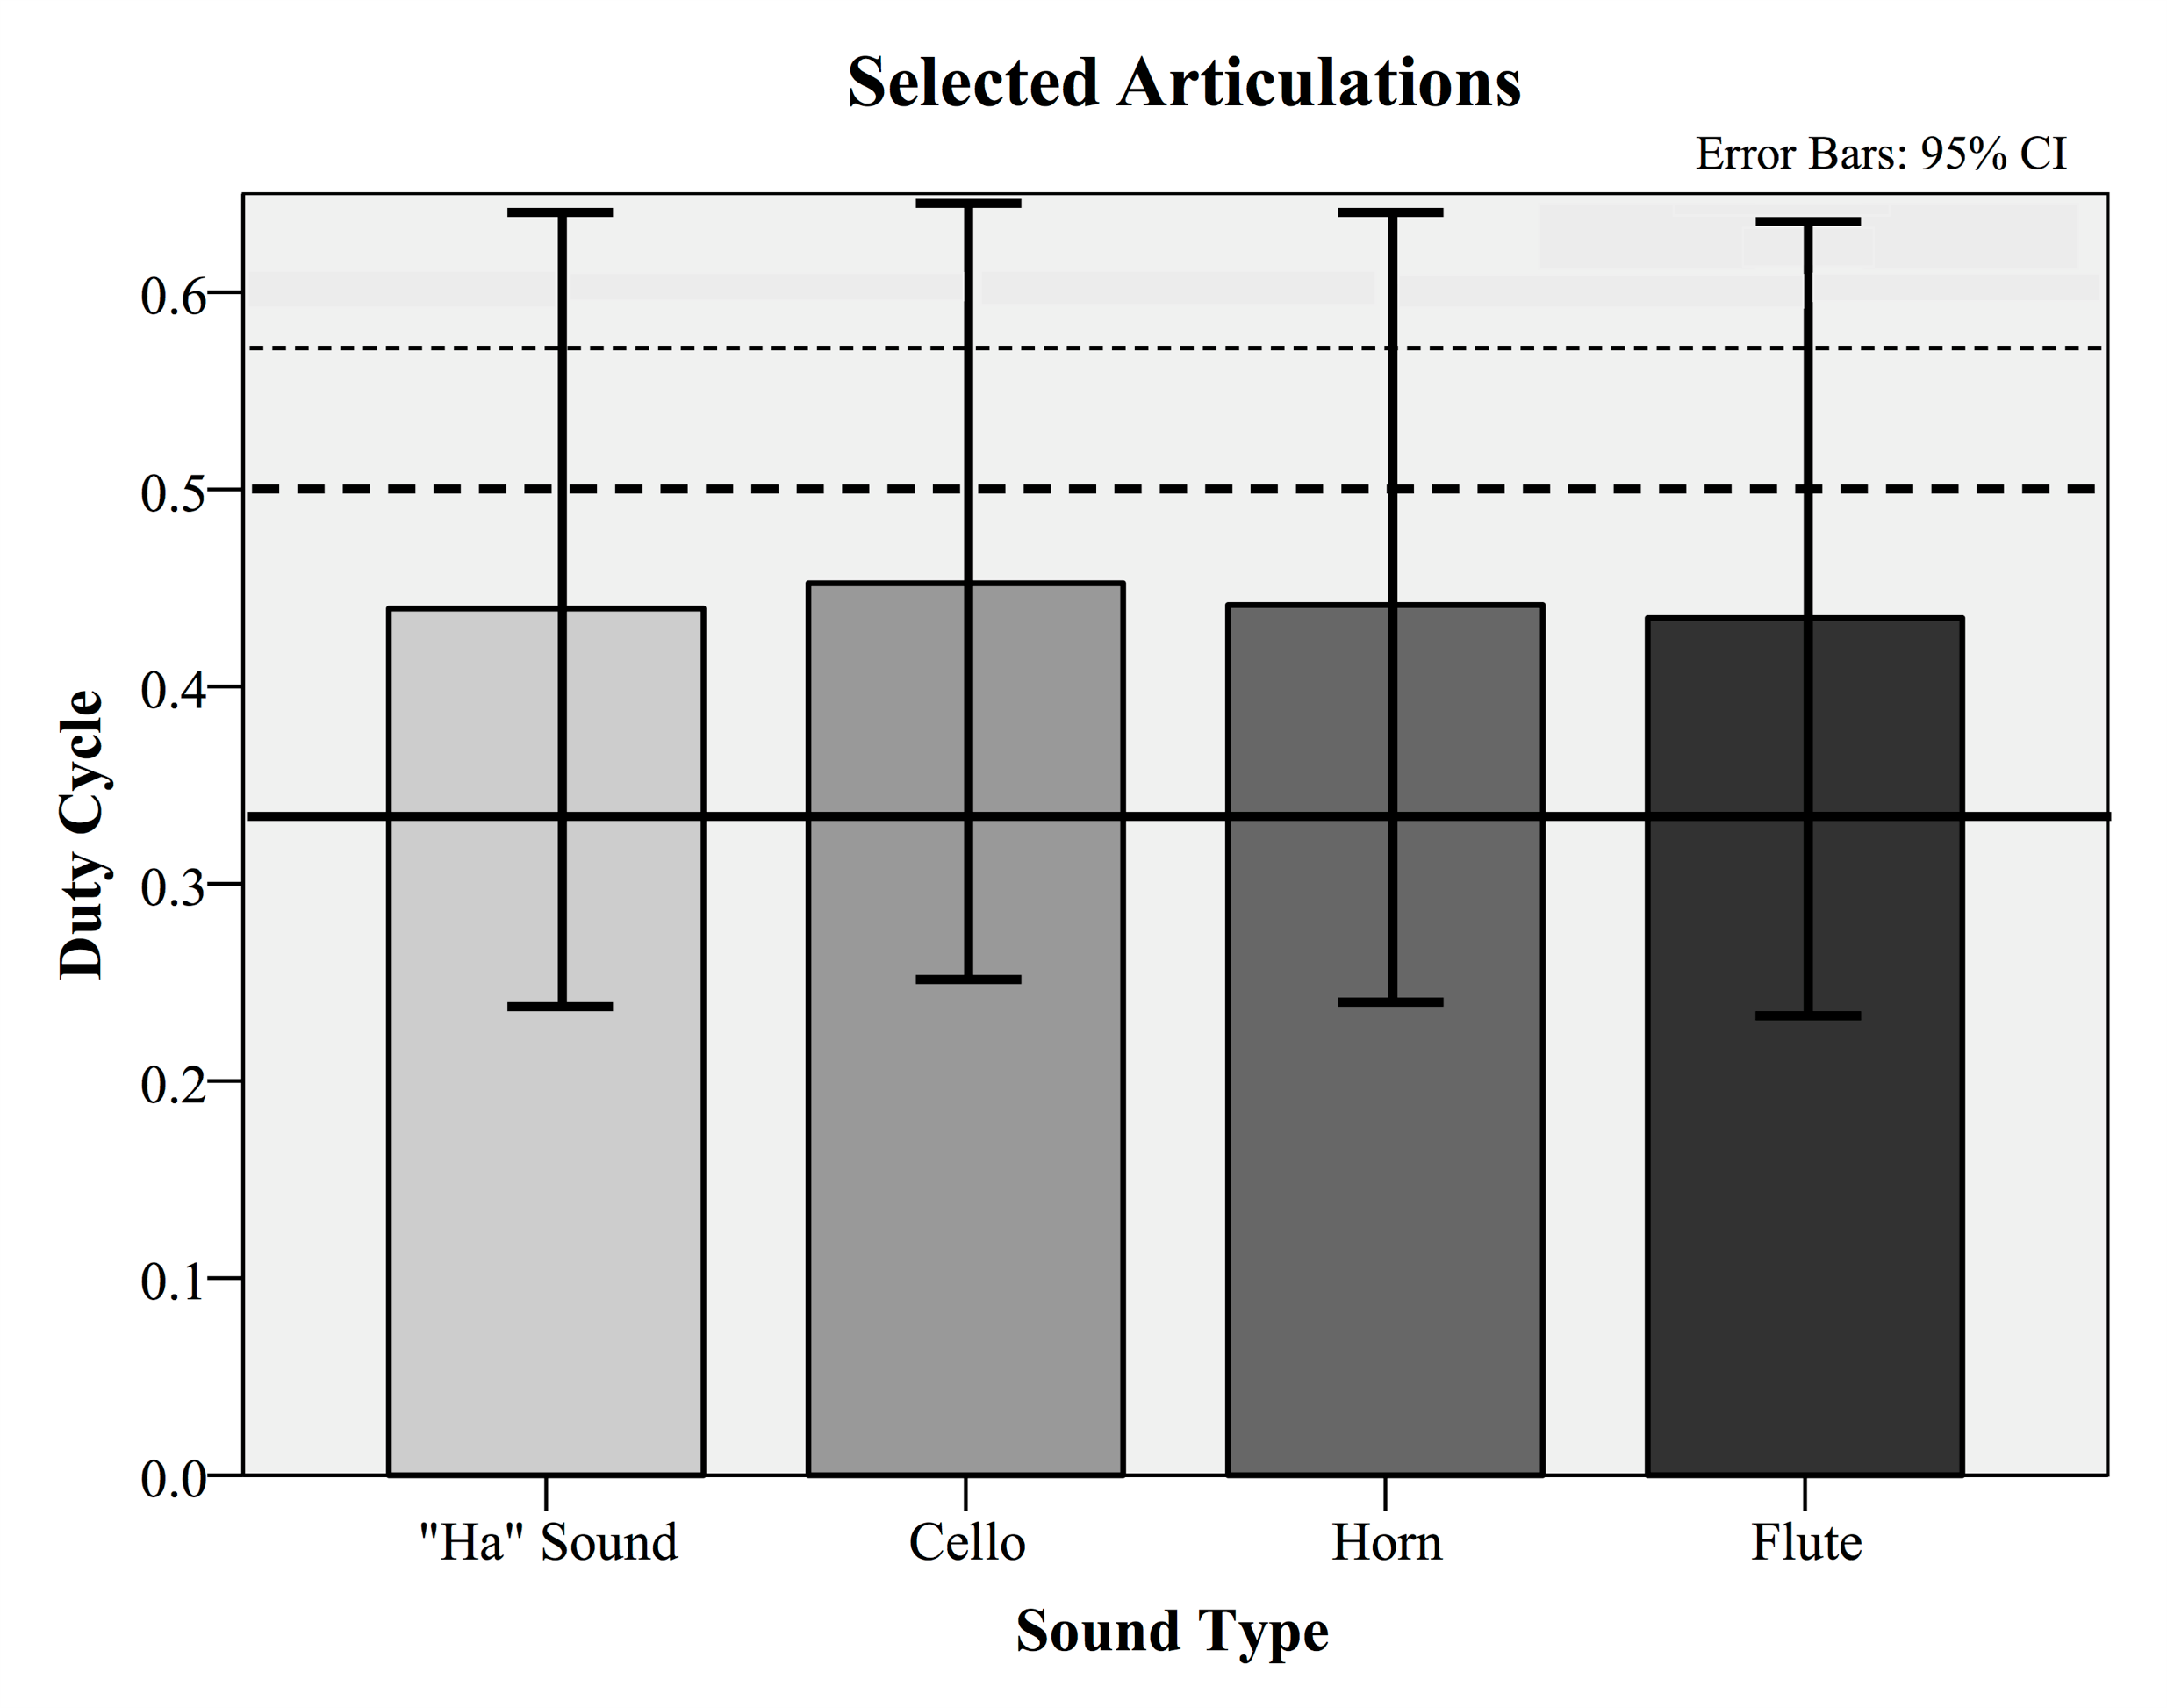 Visual representation of selected articulations. More description below.